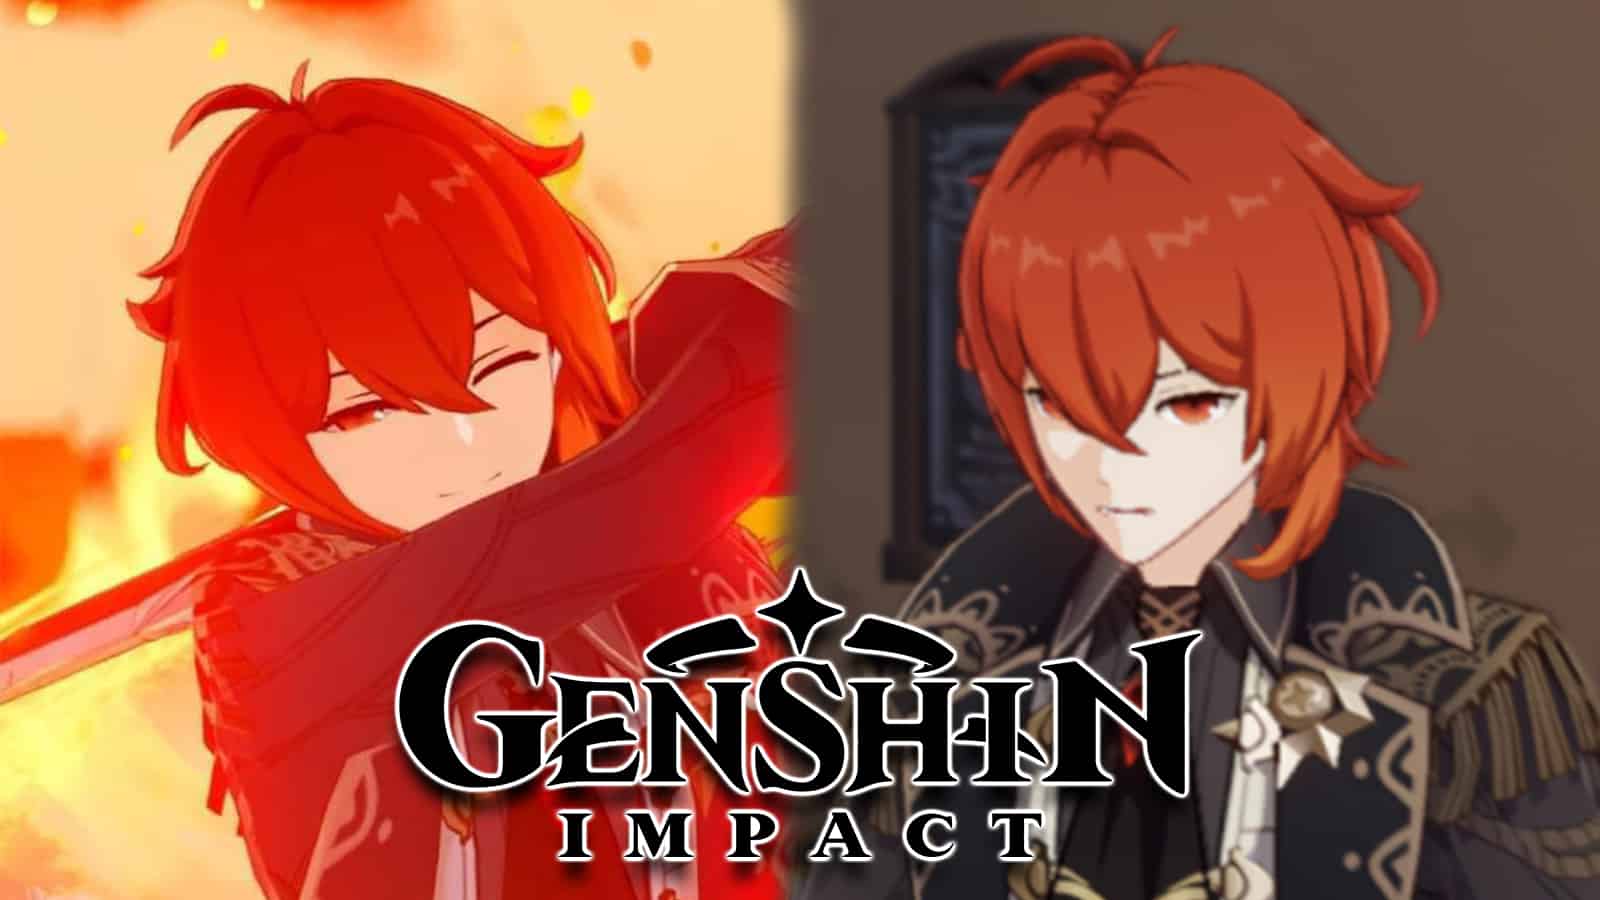 Genshin Impact Diluc using his Elemental Burst